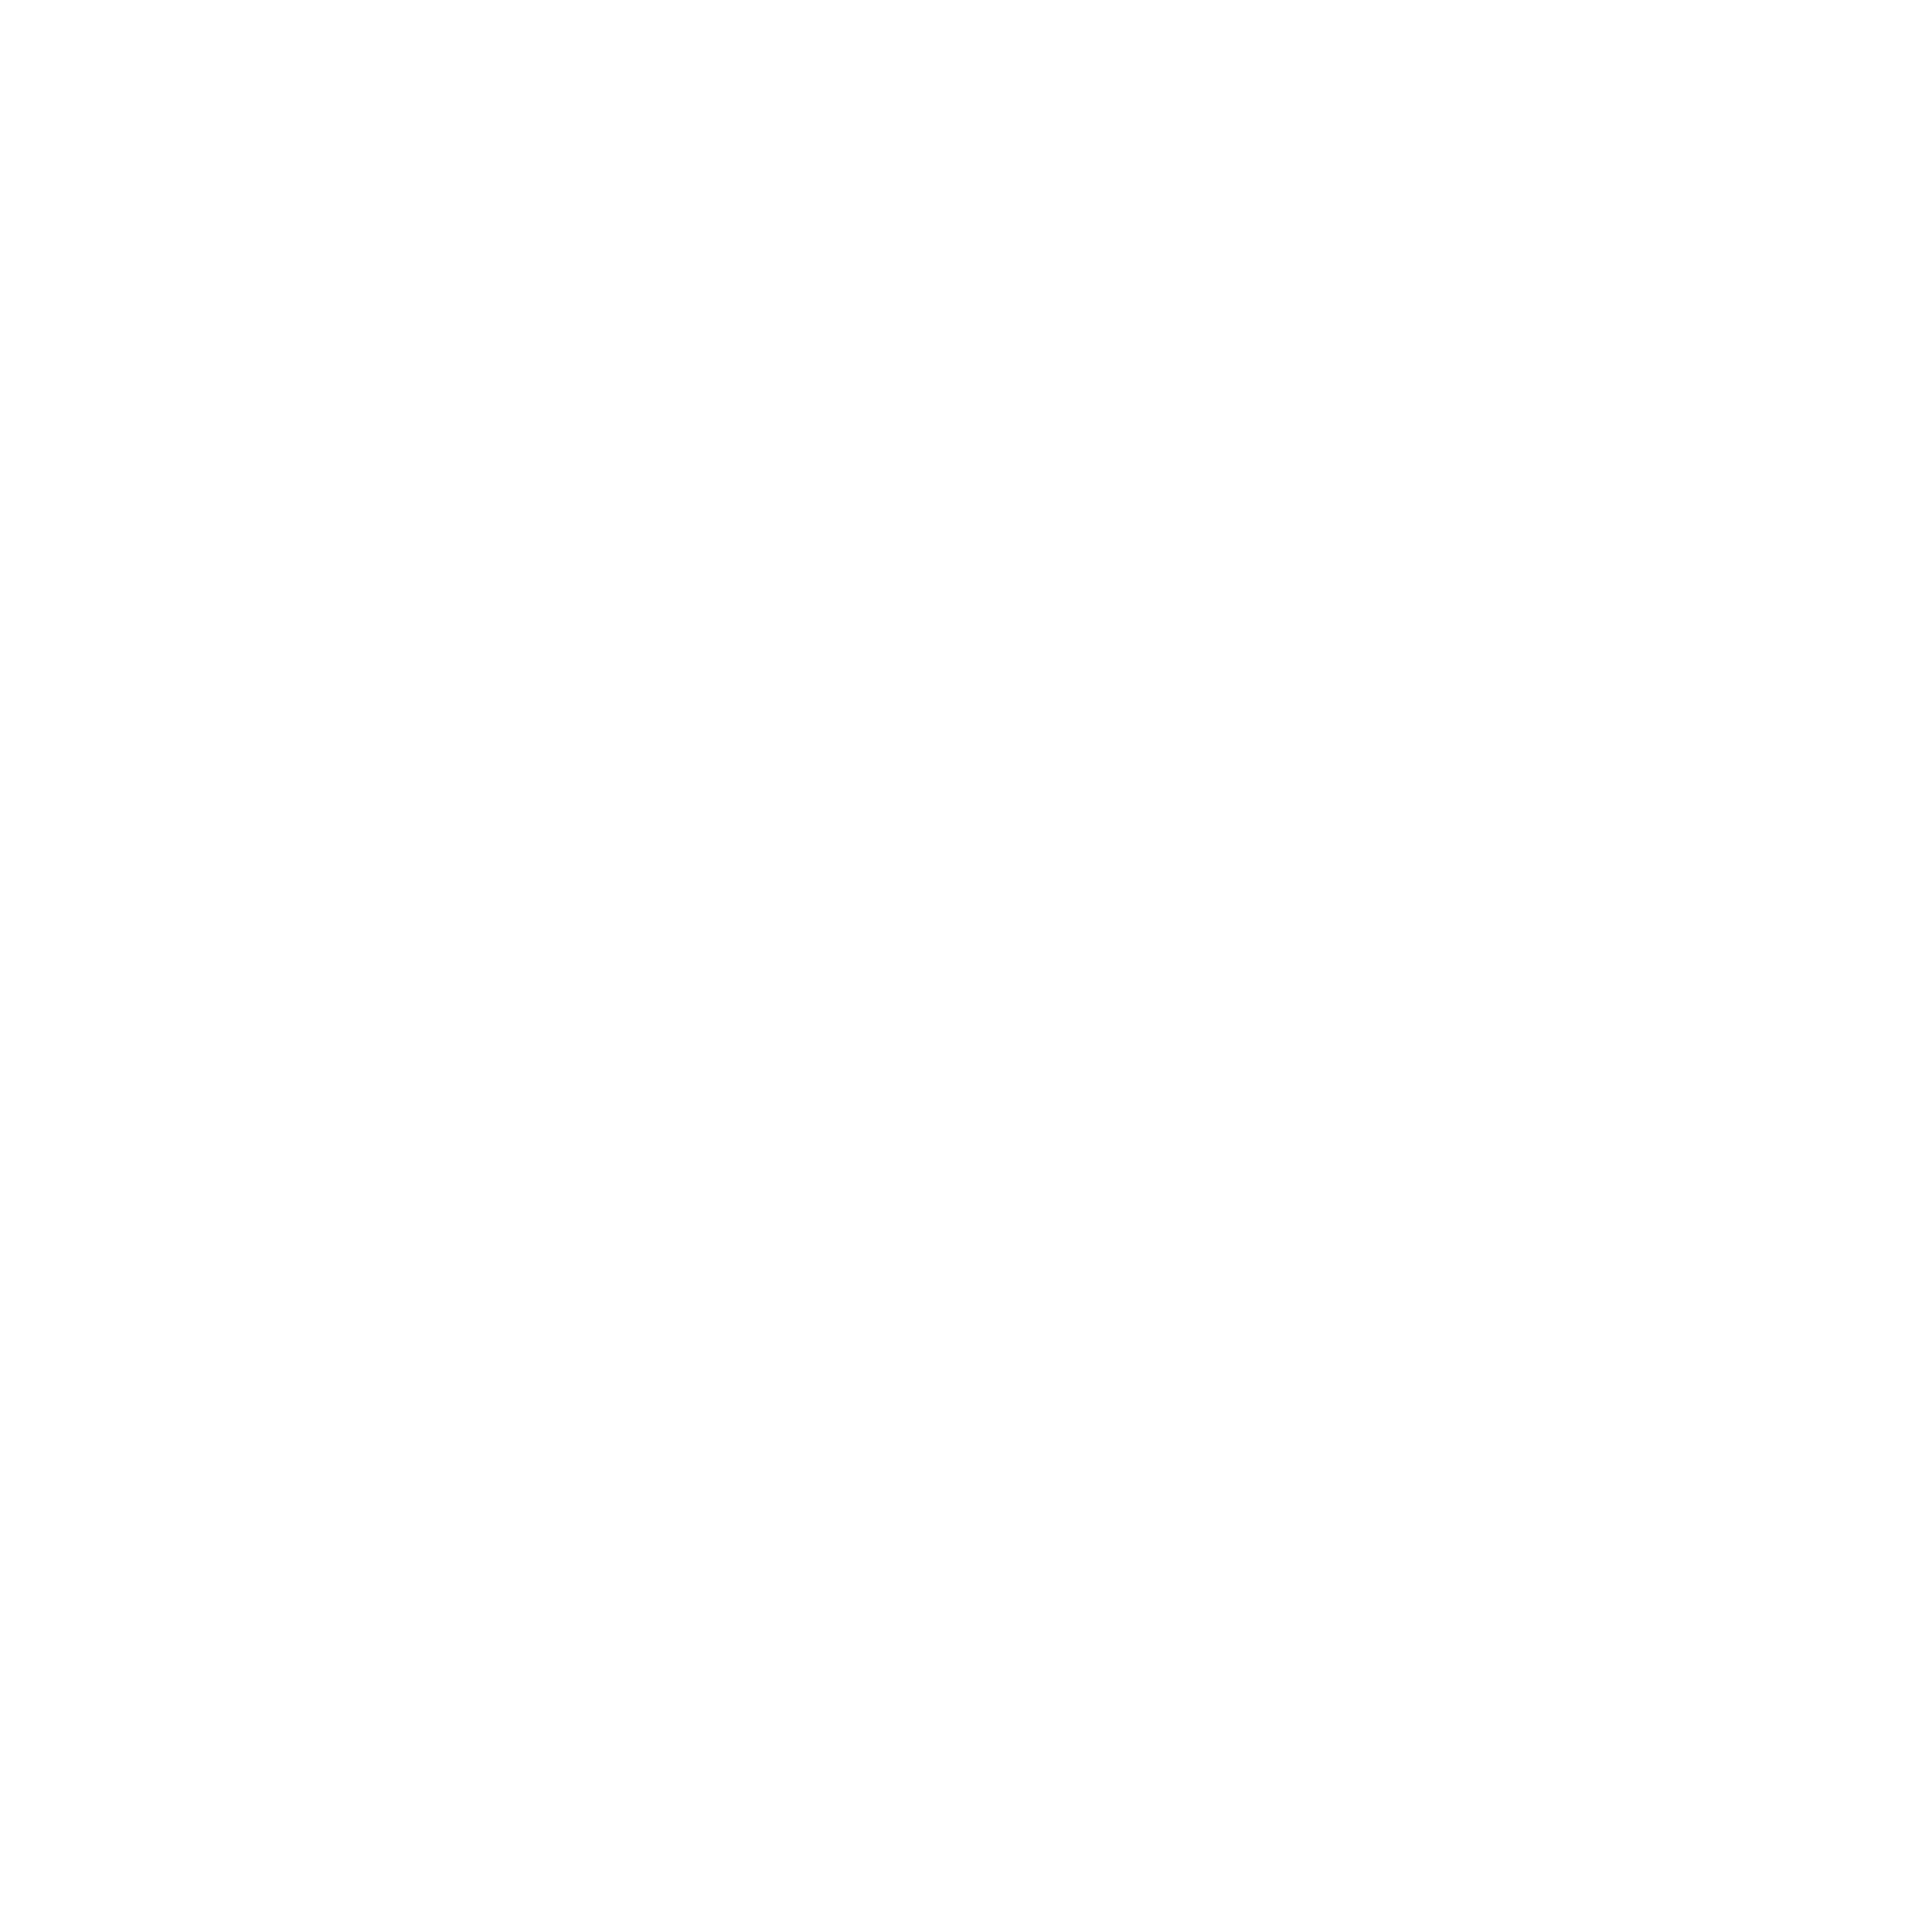 UniPro Logo - Unipro Logo PNG Transparent & SVG Vector - Freebie Supply